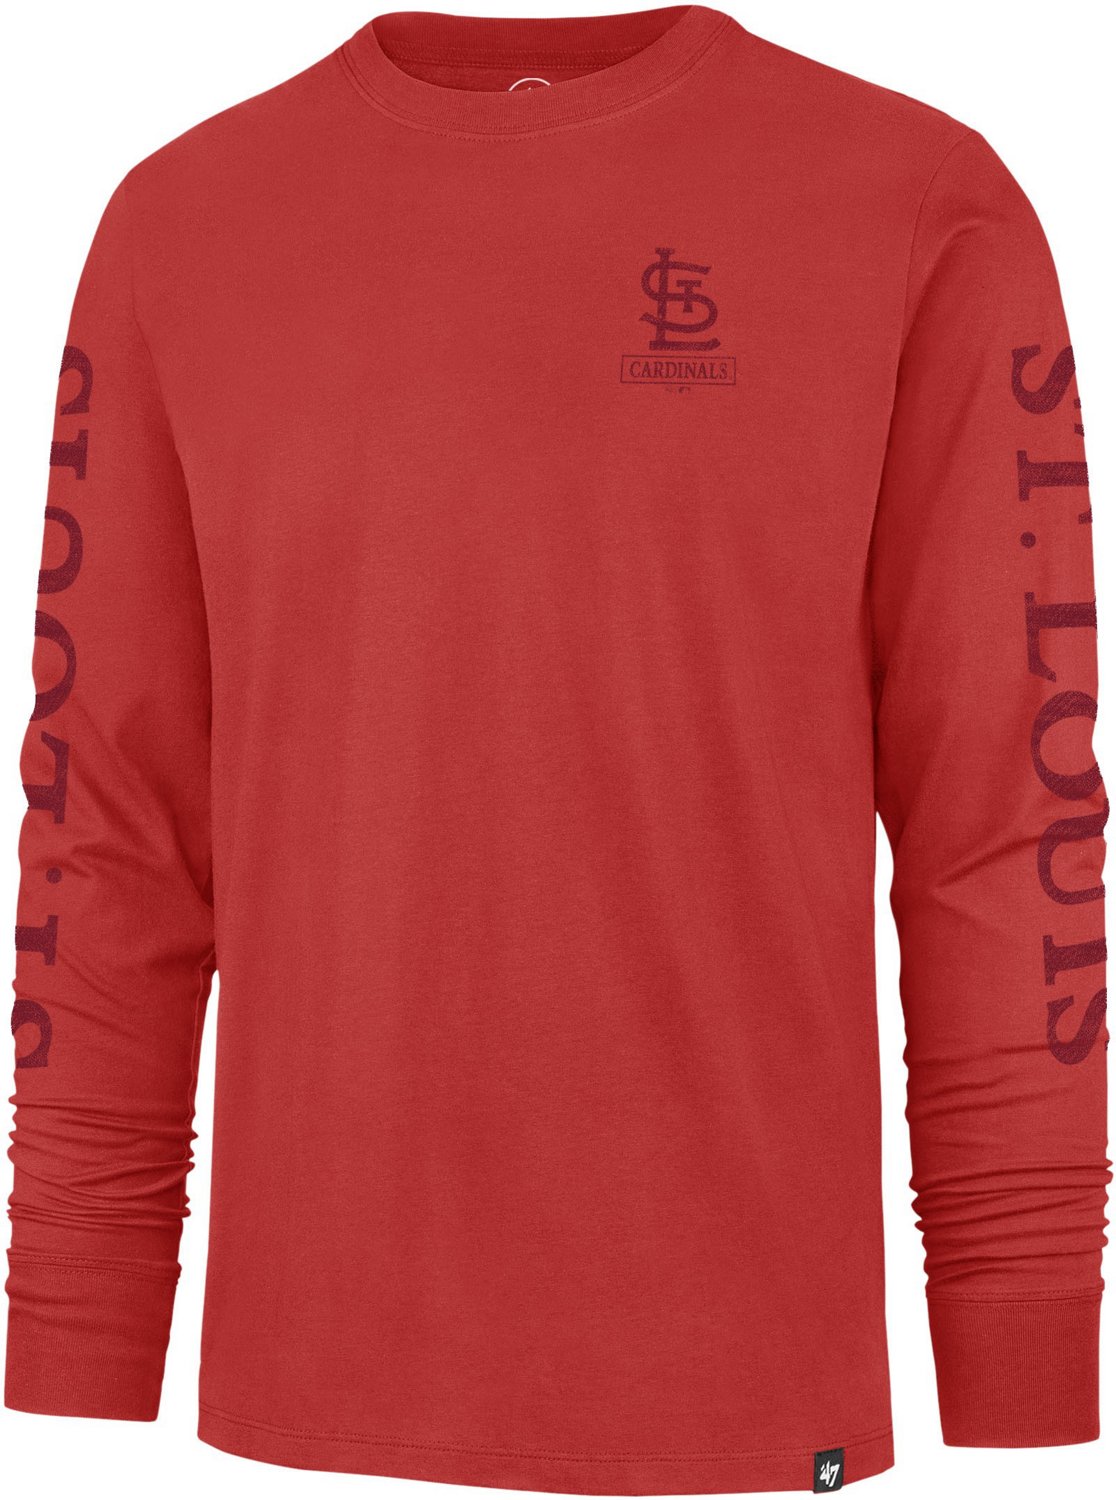 St Louis Cardinals Shirt 